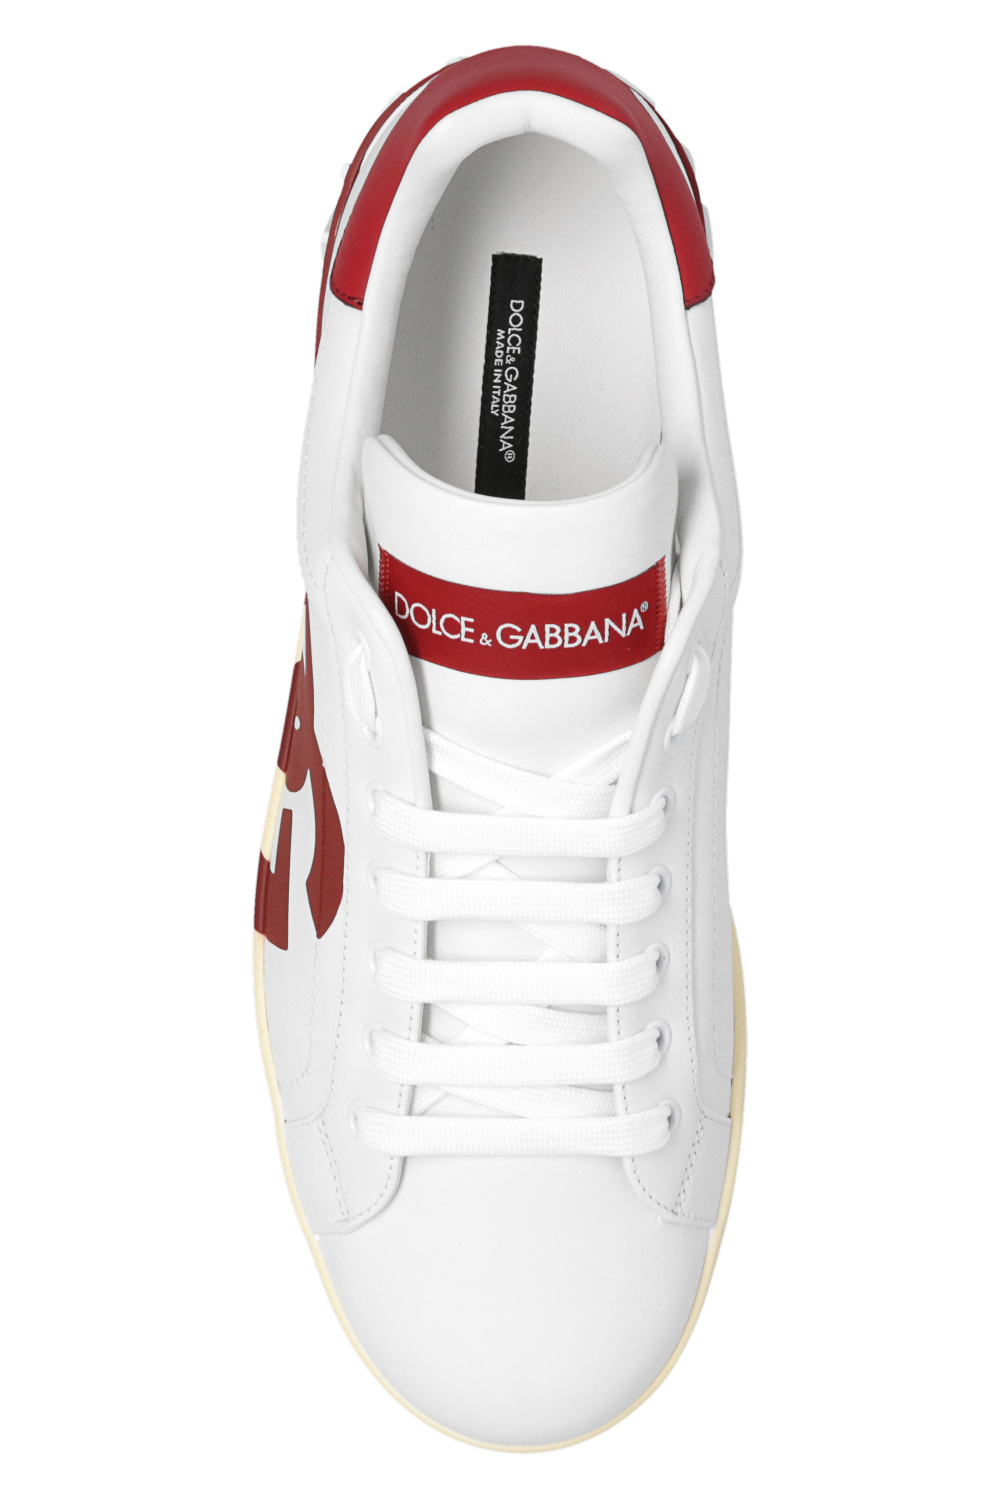 Dolce & Gabbana logo label crew neck T-shirt ‘Portofino’ sneakers